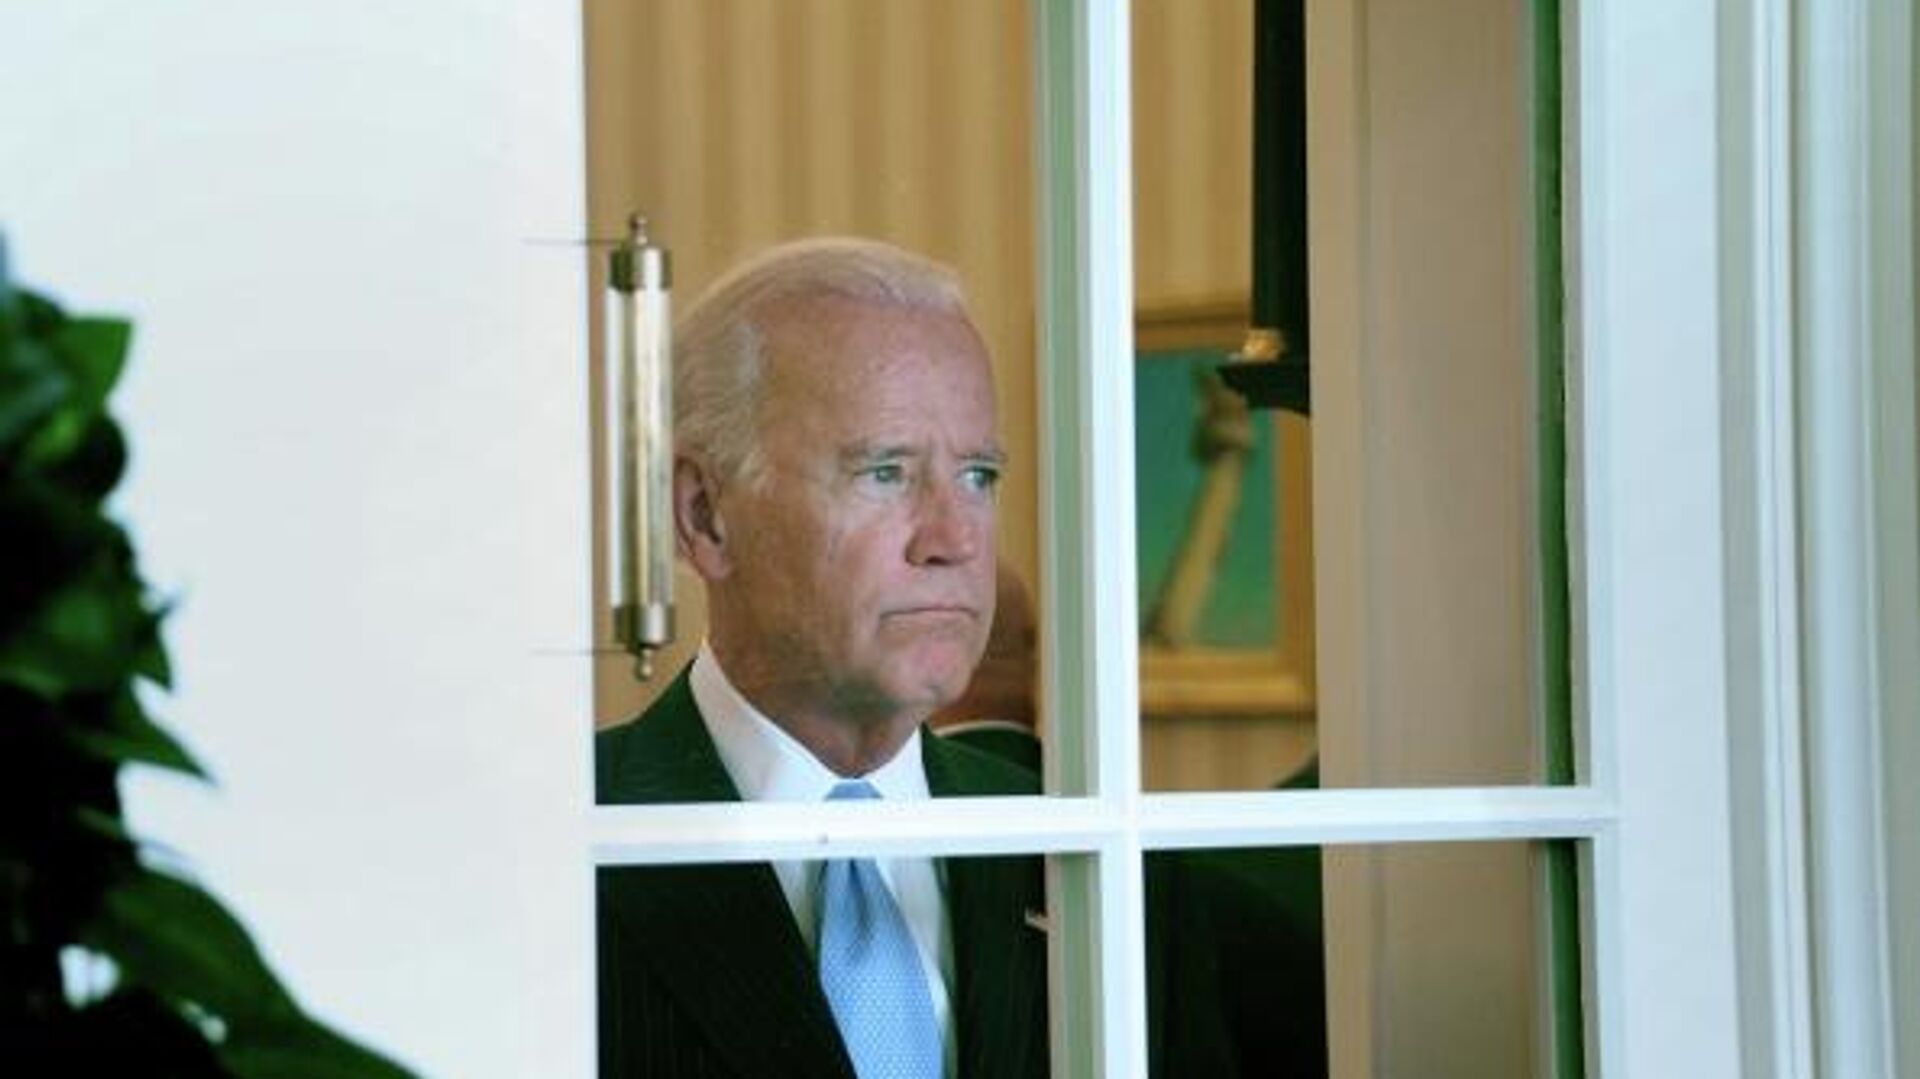 Sad Joe Biden photo from 2014. Source of endless internet memes. - Sputnik International, 1920, 26.03.2023